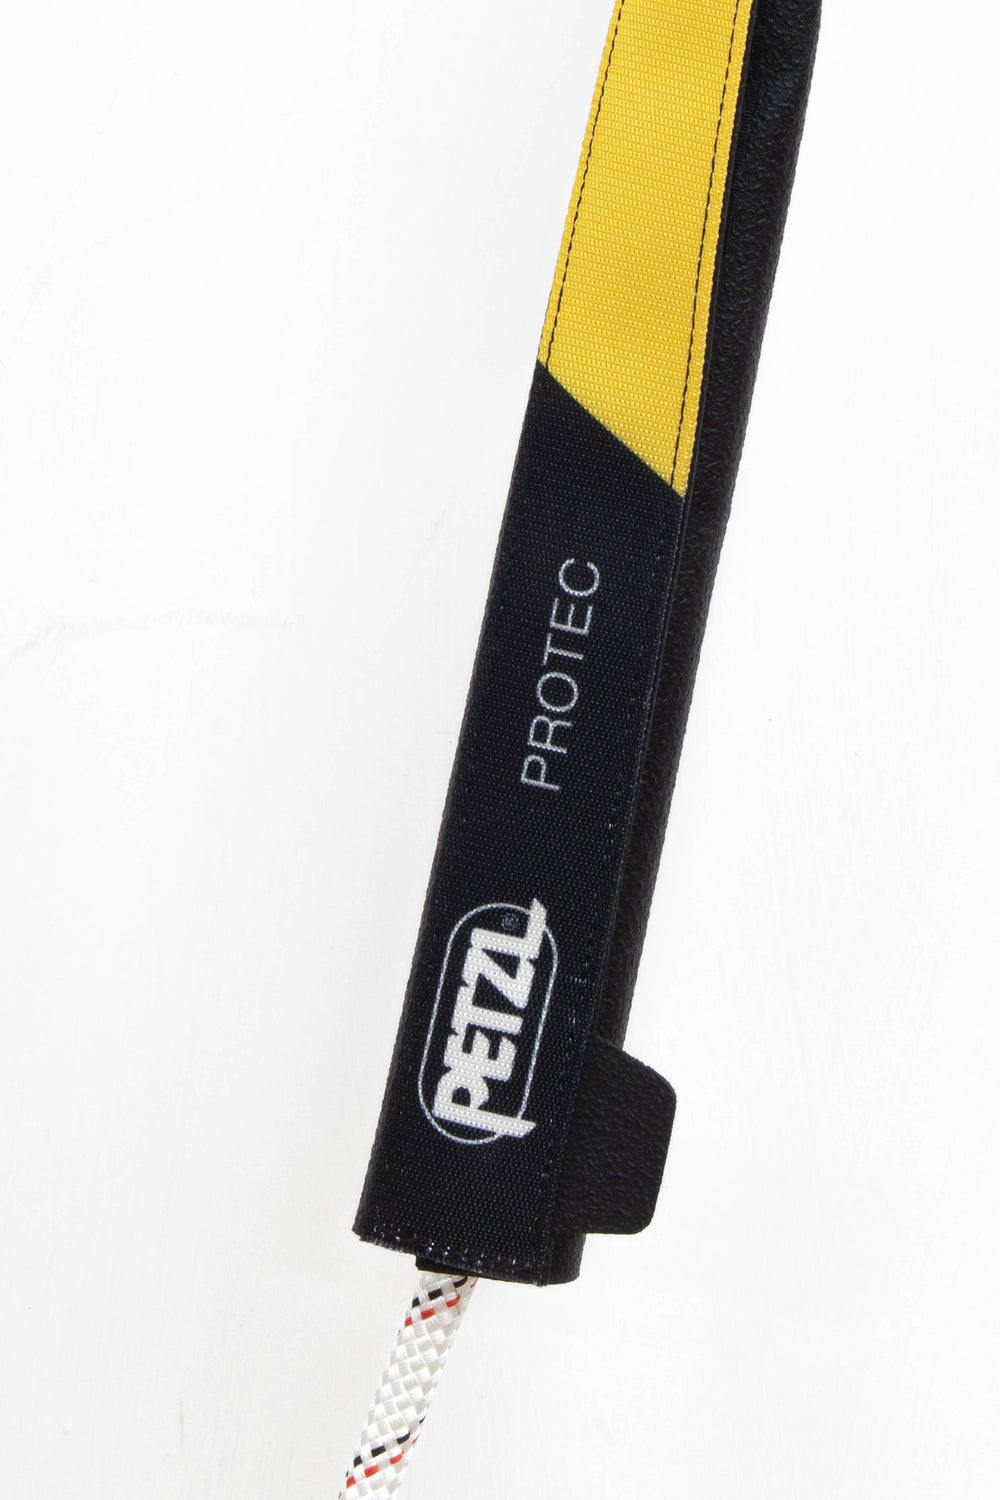 Petzl - Protec Rope Protector (2022)